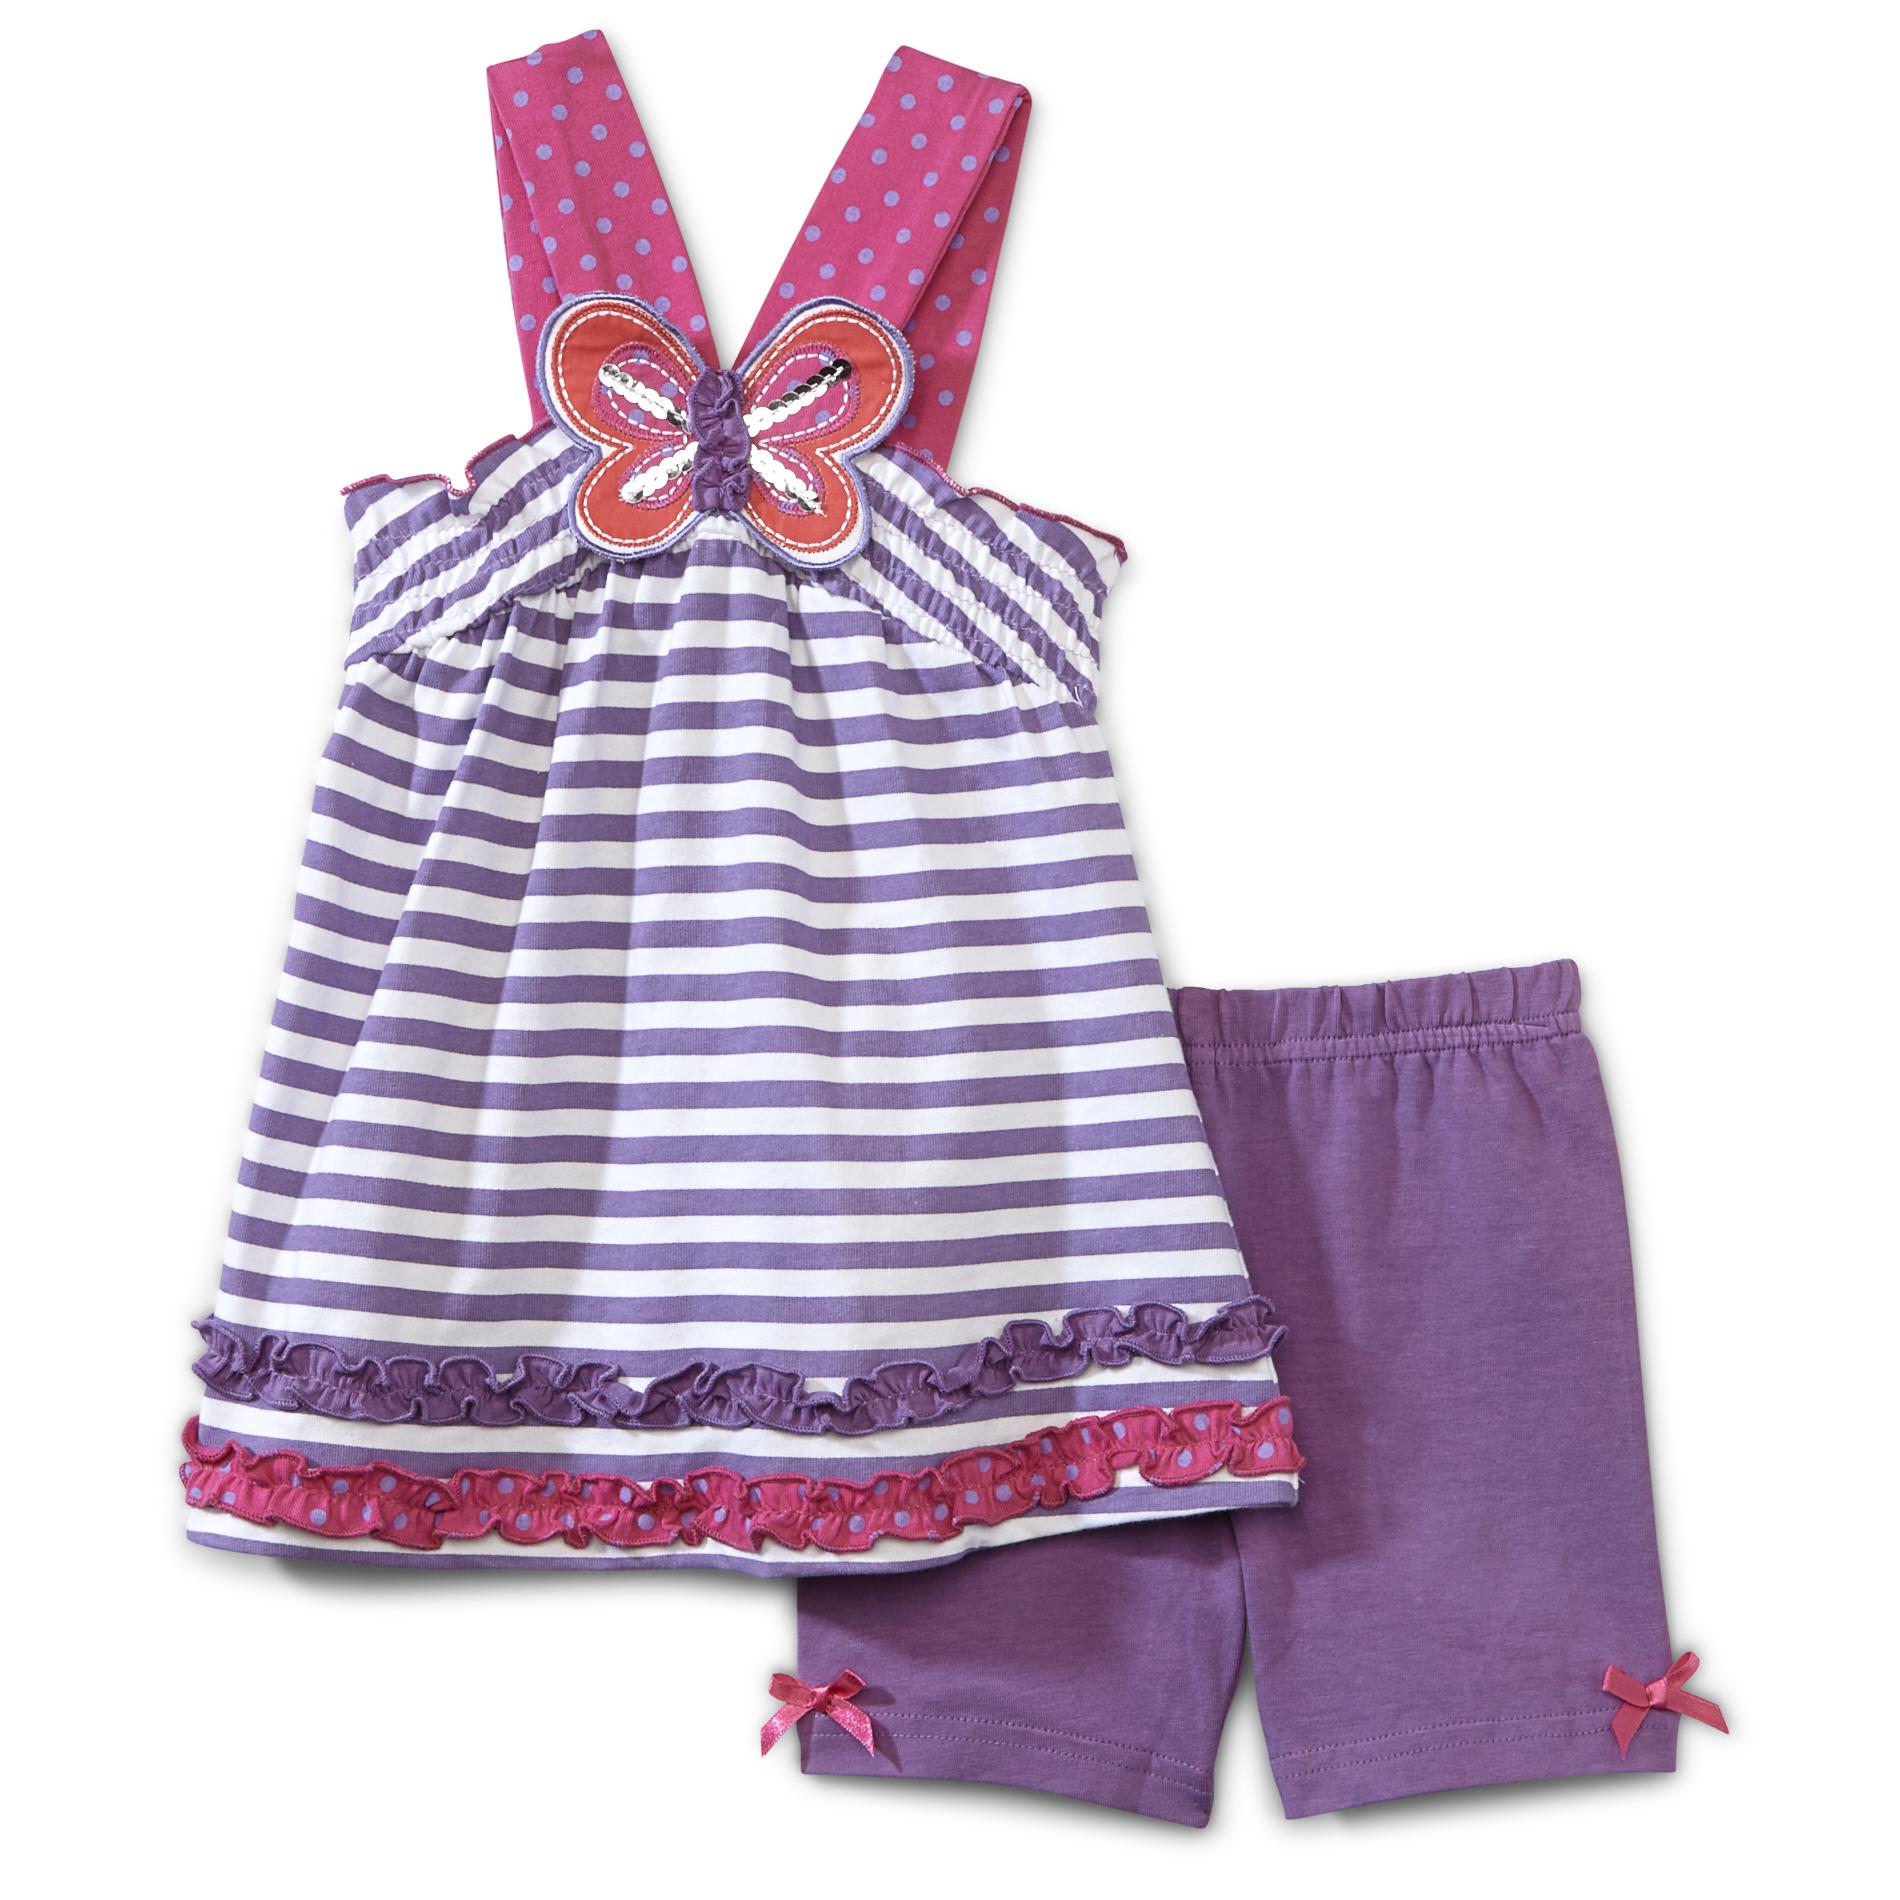 WonderKids Infant & Toddler Girl's Top & Shorts - Butterfly